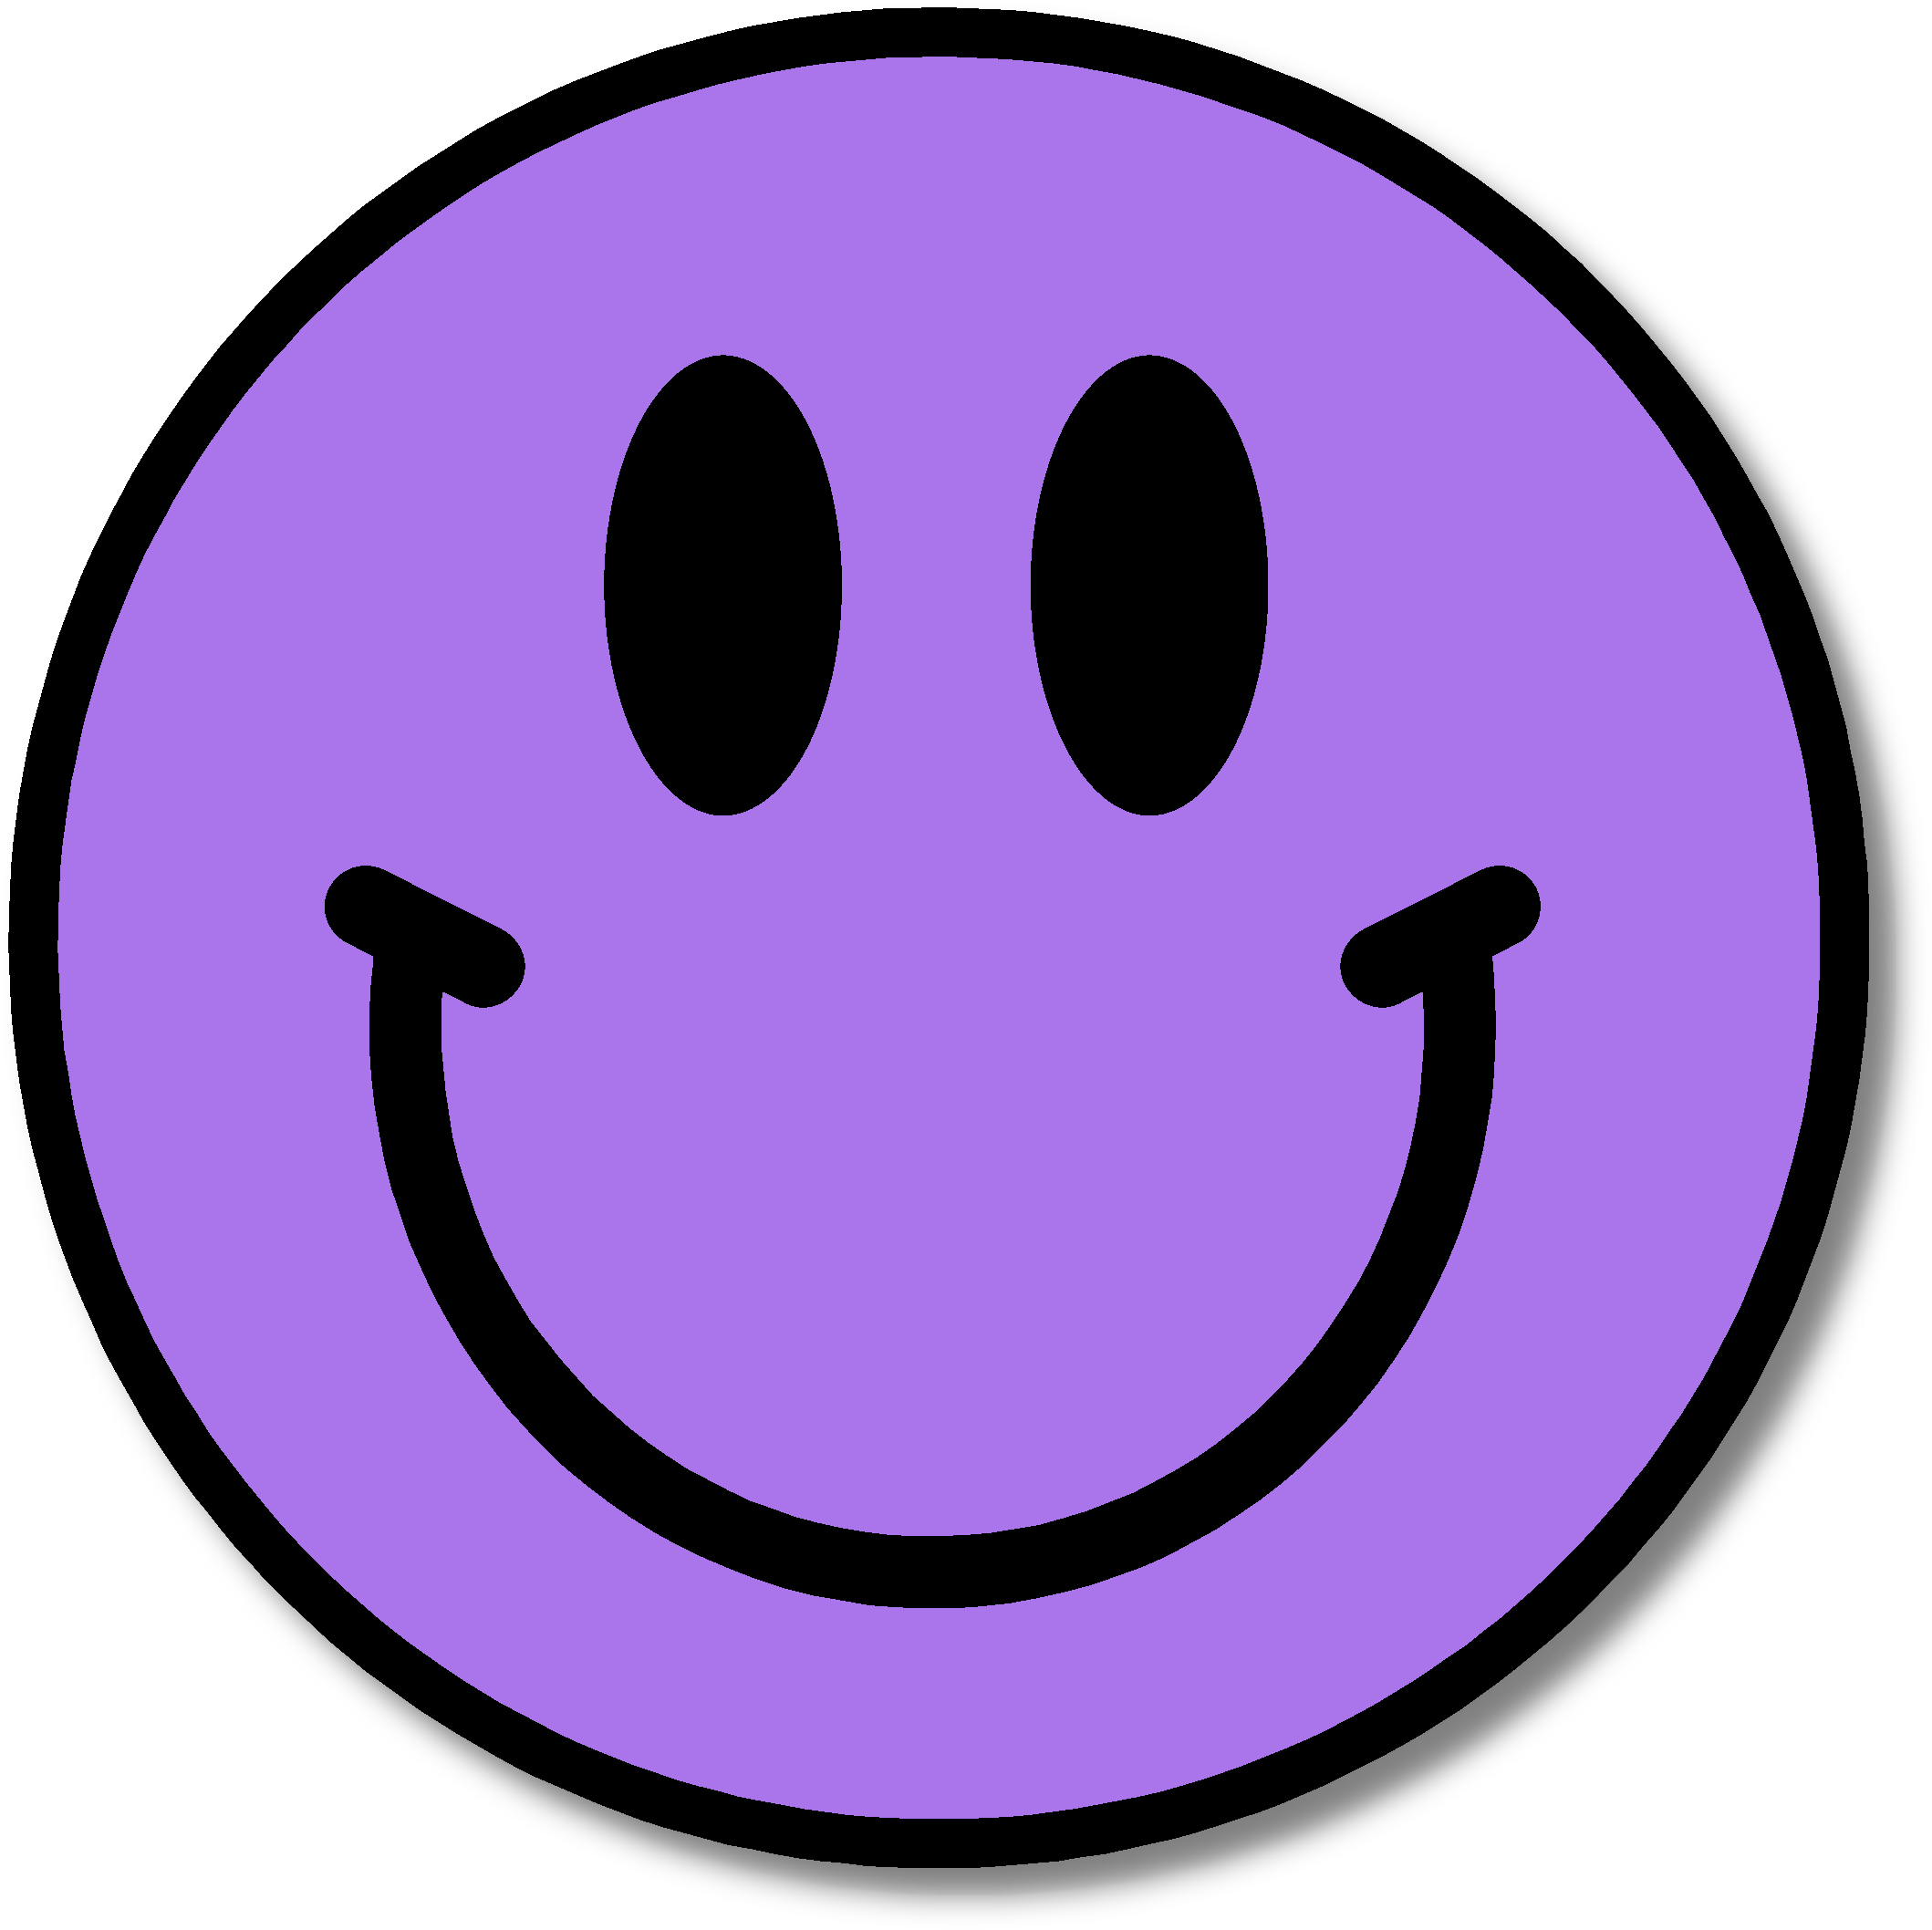 Free Clip Art Smiley Faces - 